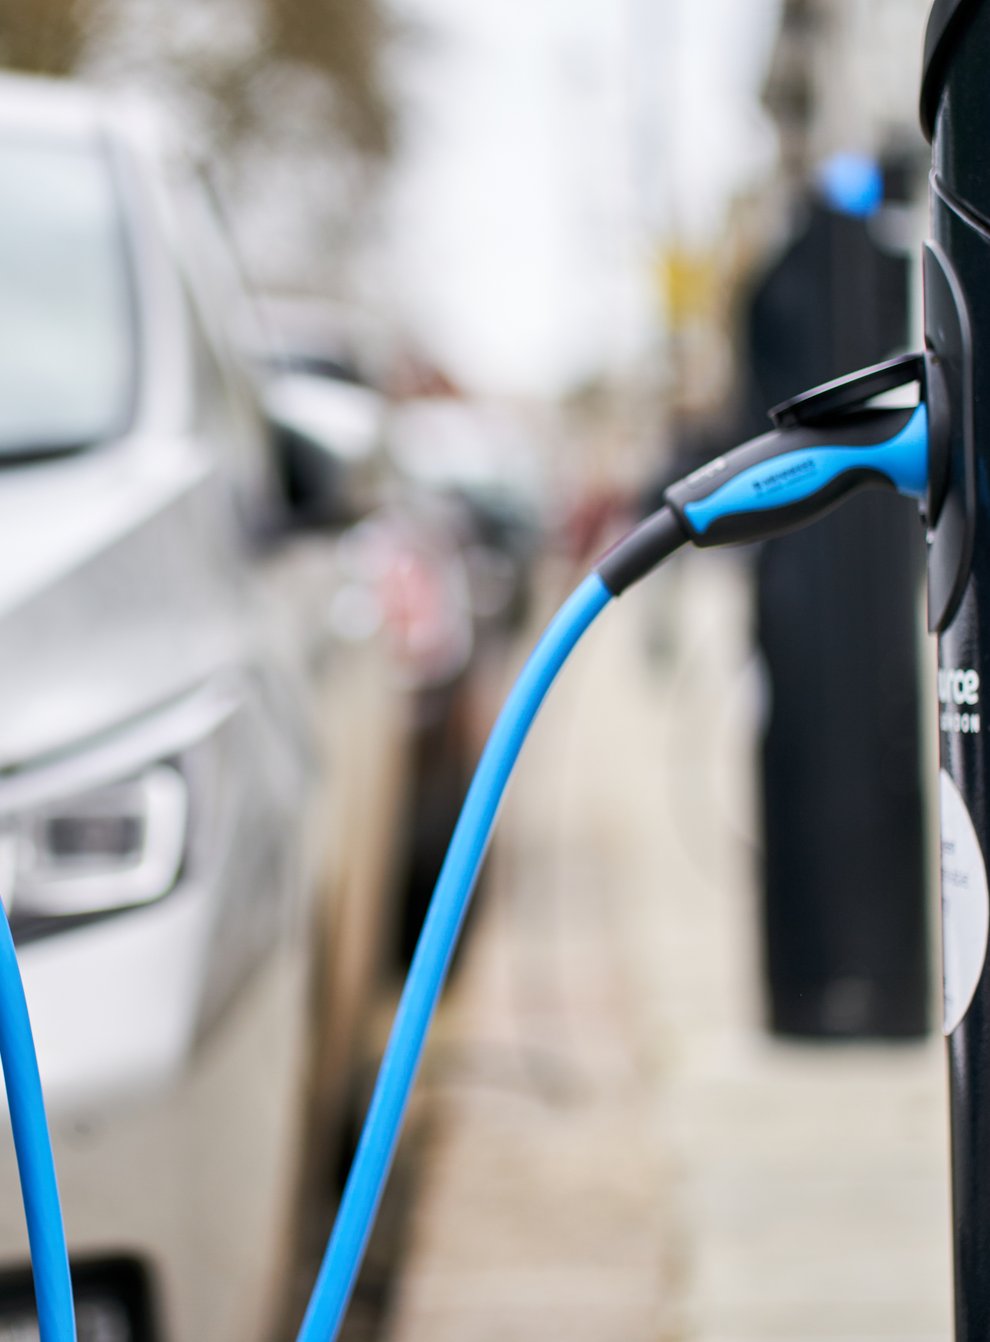 Electric car charging – London